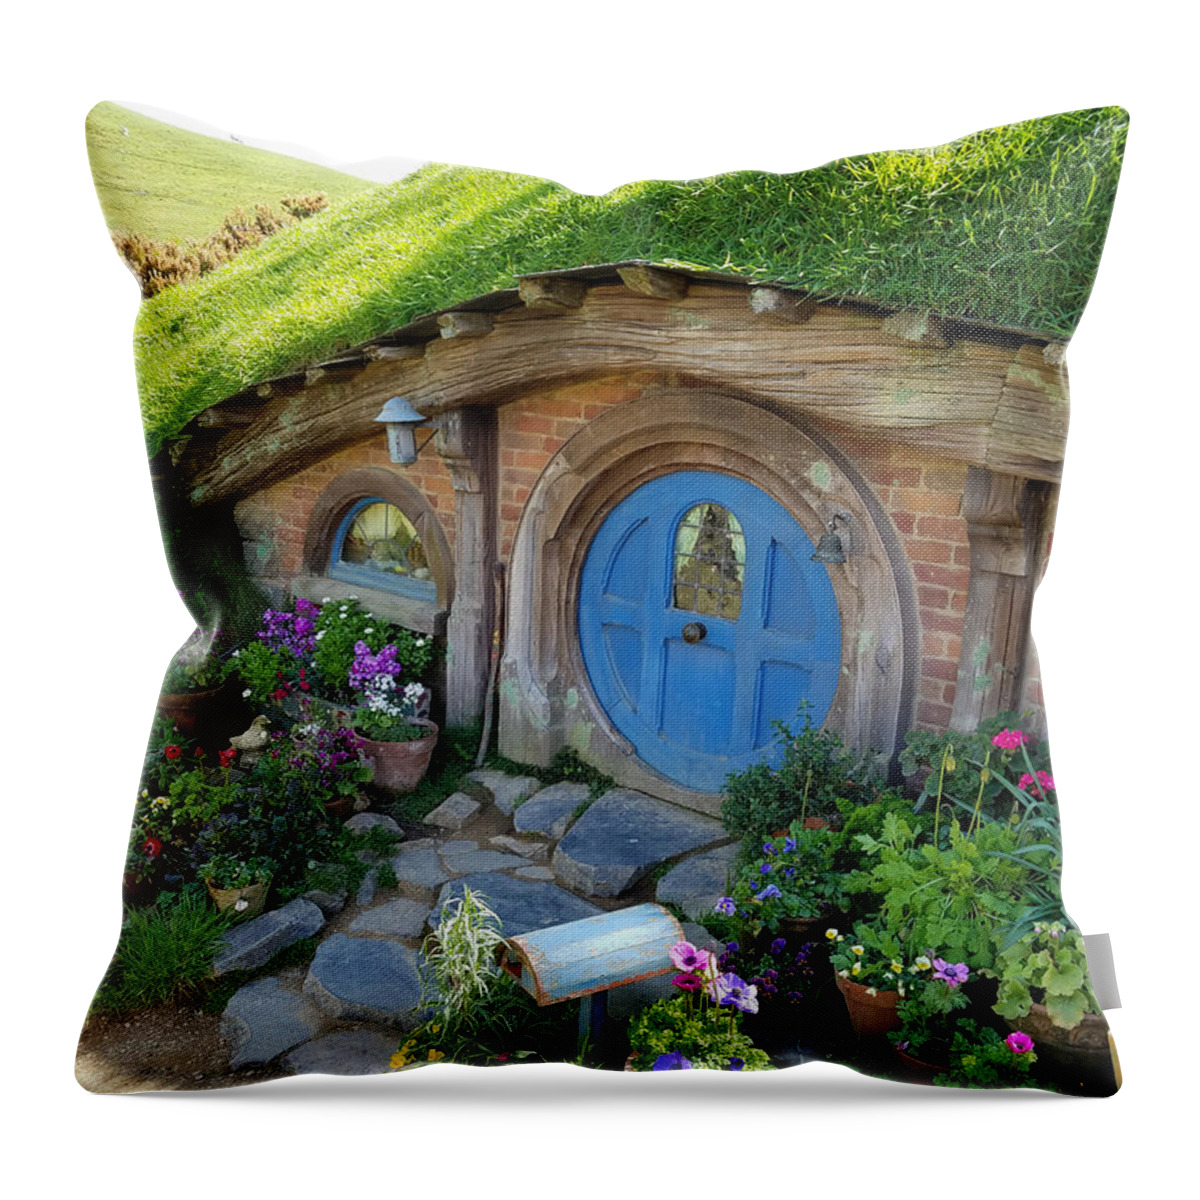 Photograph Throw Pillow featuring the photograph Home Sweet Hobbit by Richard Gehlbach